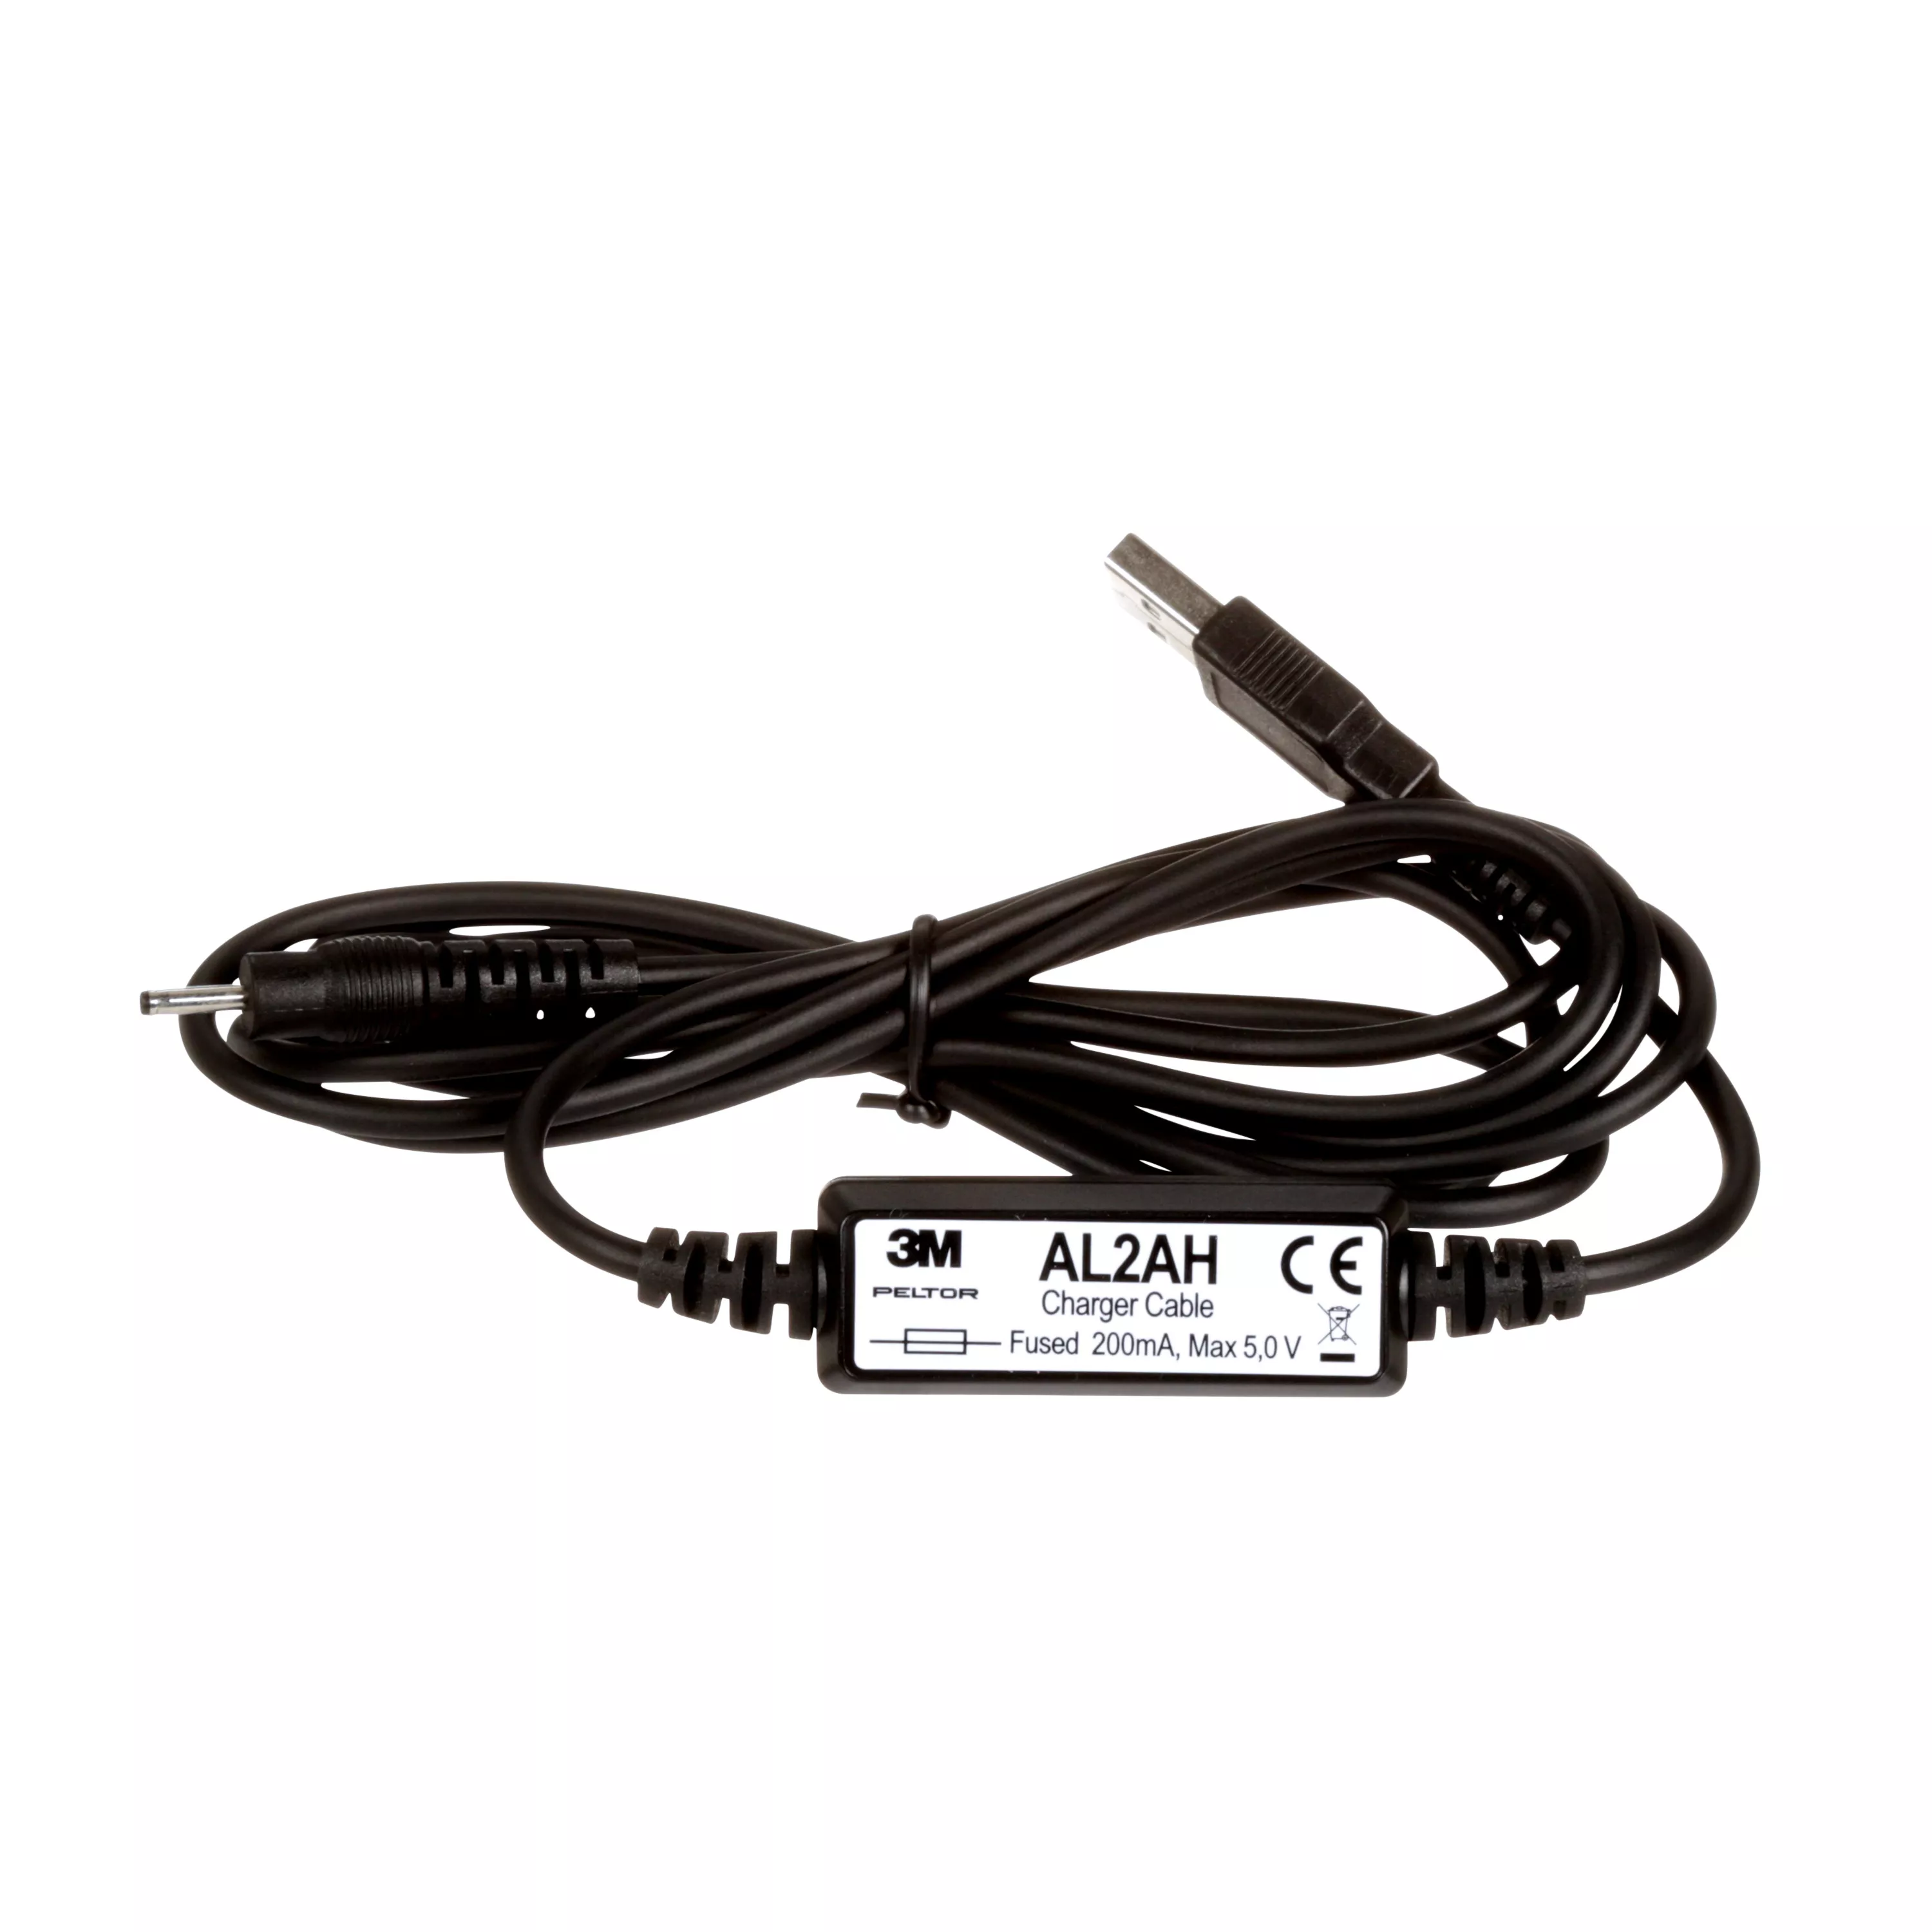 3M™ PELTOR™ Charging Cable, AL2AH, 1 EA/Case